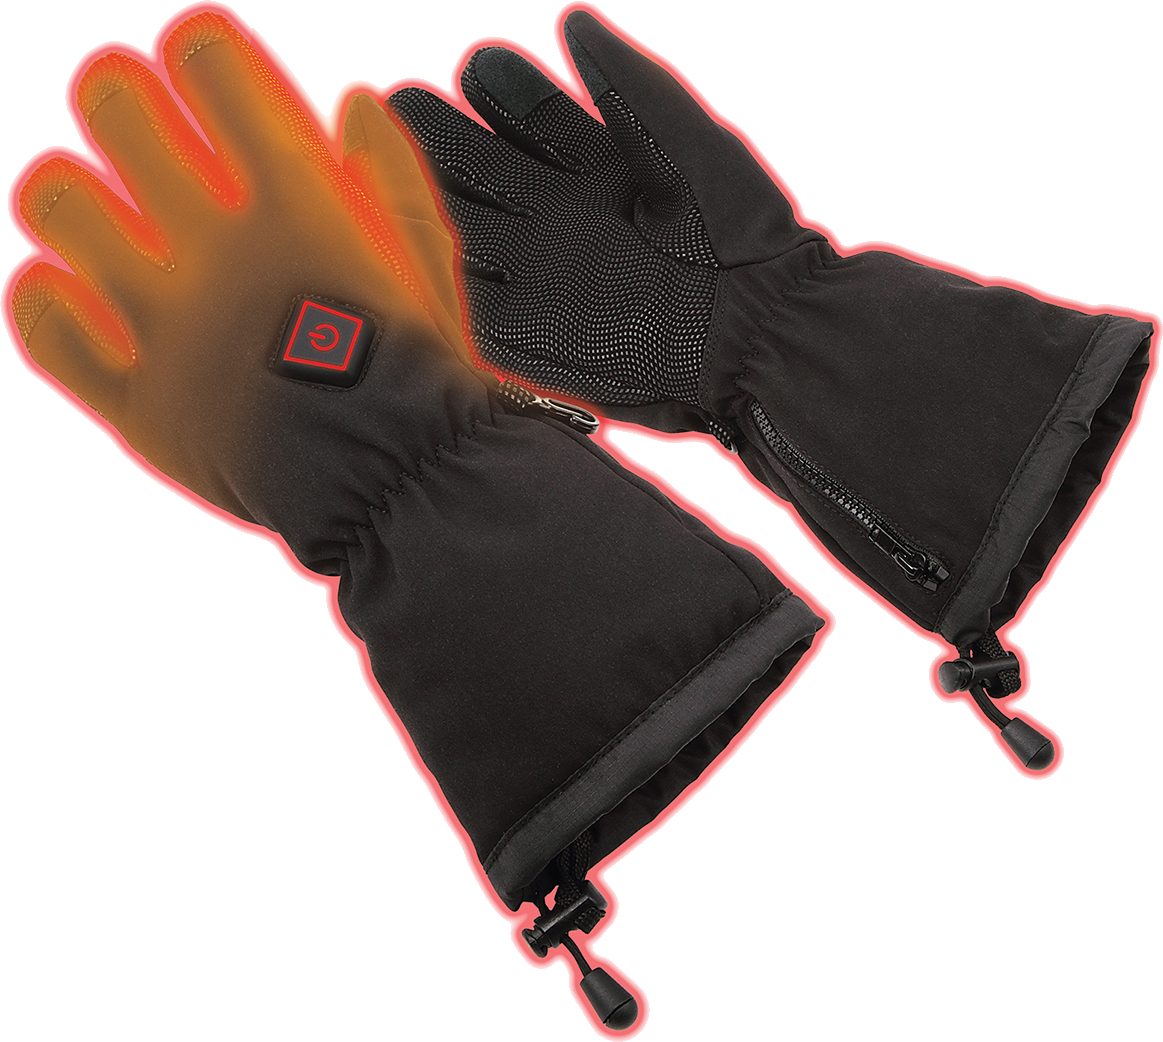 Thermo Skihandschuhe THERMO SKI Ski GLOVES die Handschuhe beheizbaren